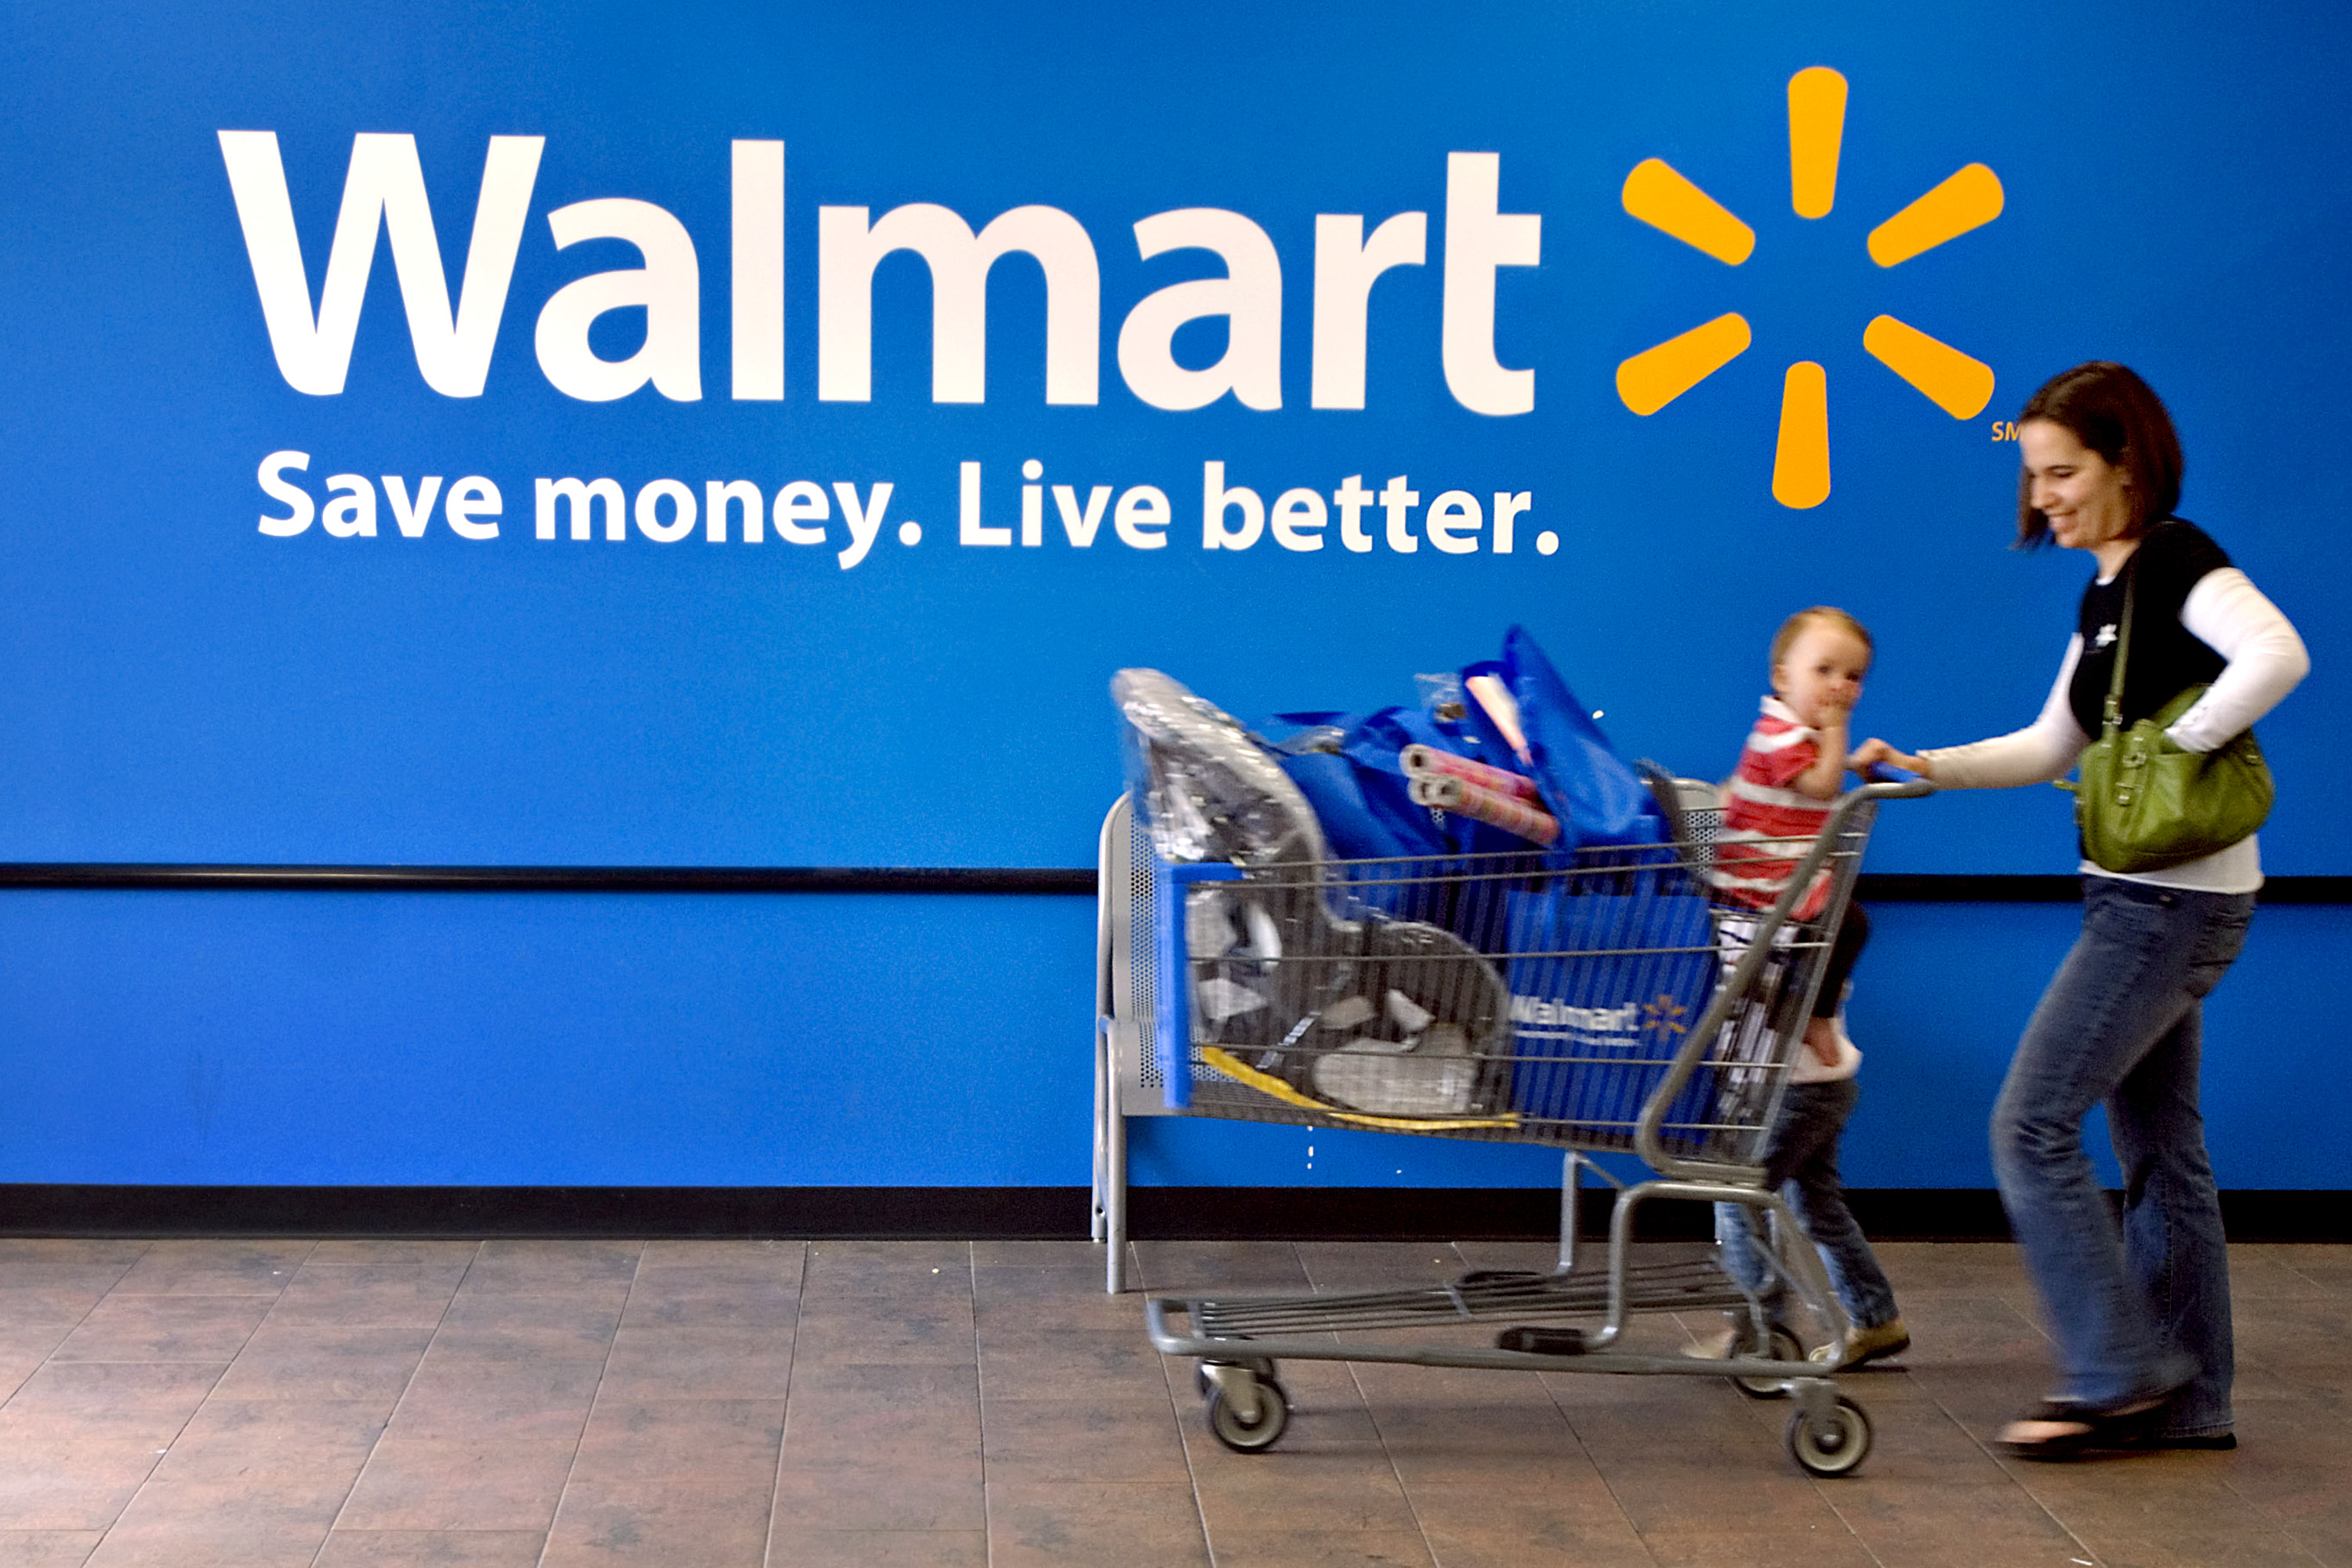 Live on money. Walmart реклама. Реклама Волмарт. Лозунг Волмарт. Wal-Mart слоган.